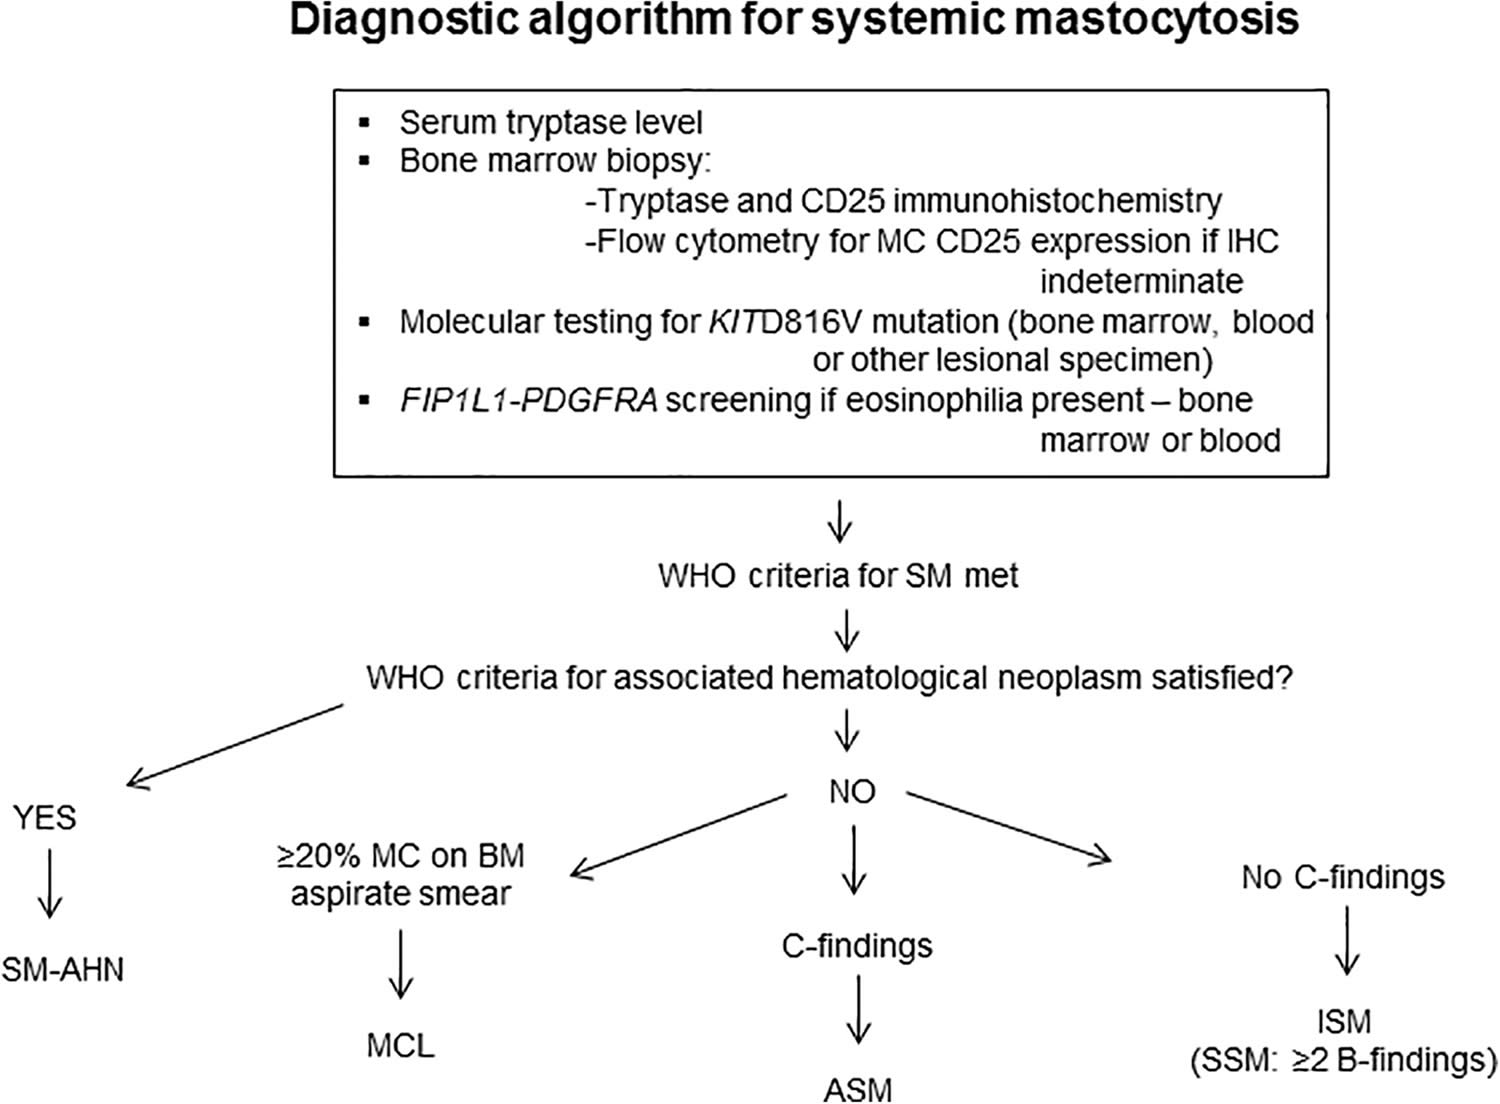 Systemic mastocytosis diagnostic algorithm